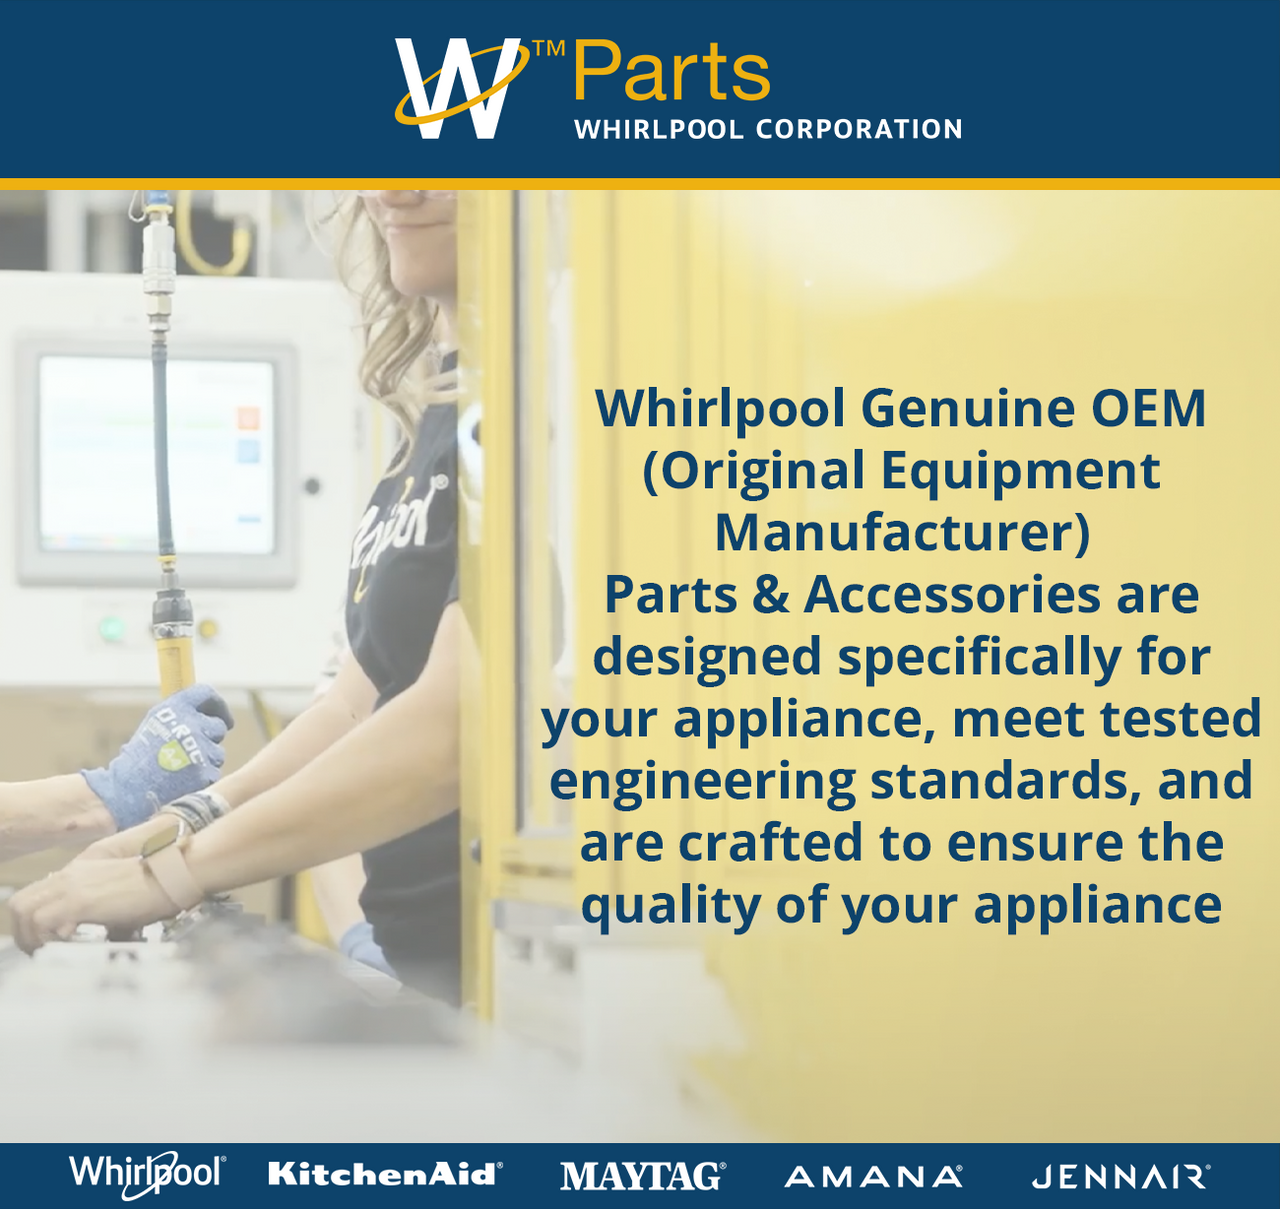 Whirlpool WPW10415450 - Range Surface Burner Control Knob - Whirlpool Genuine Part Badge